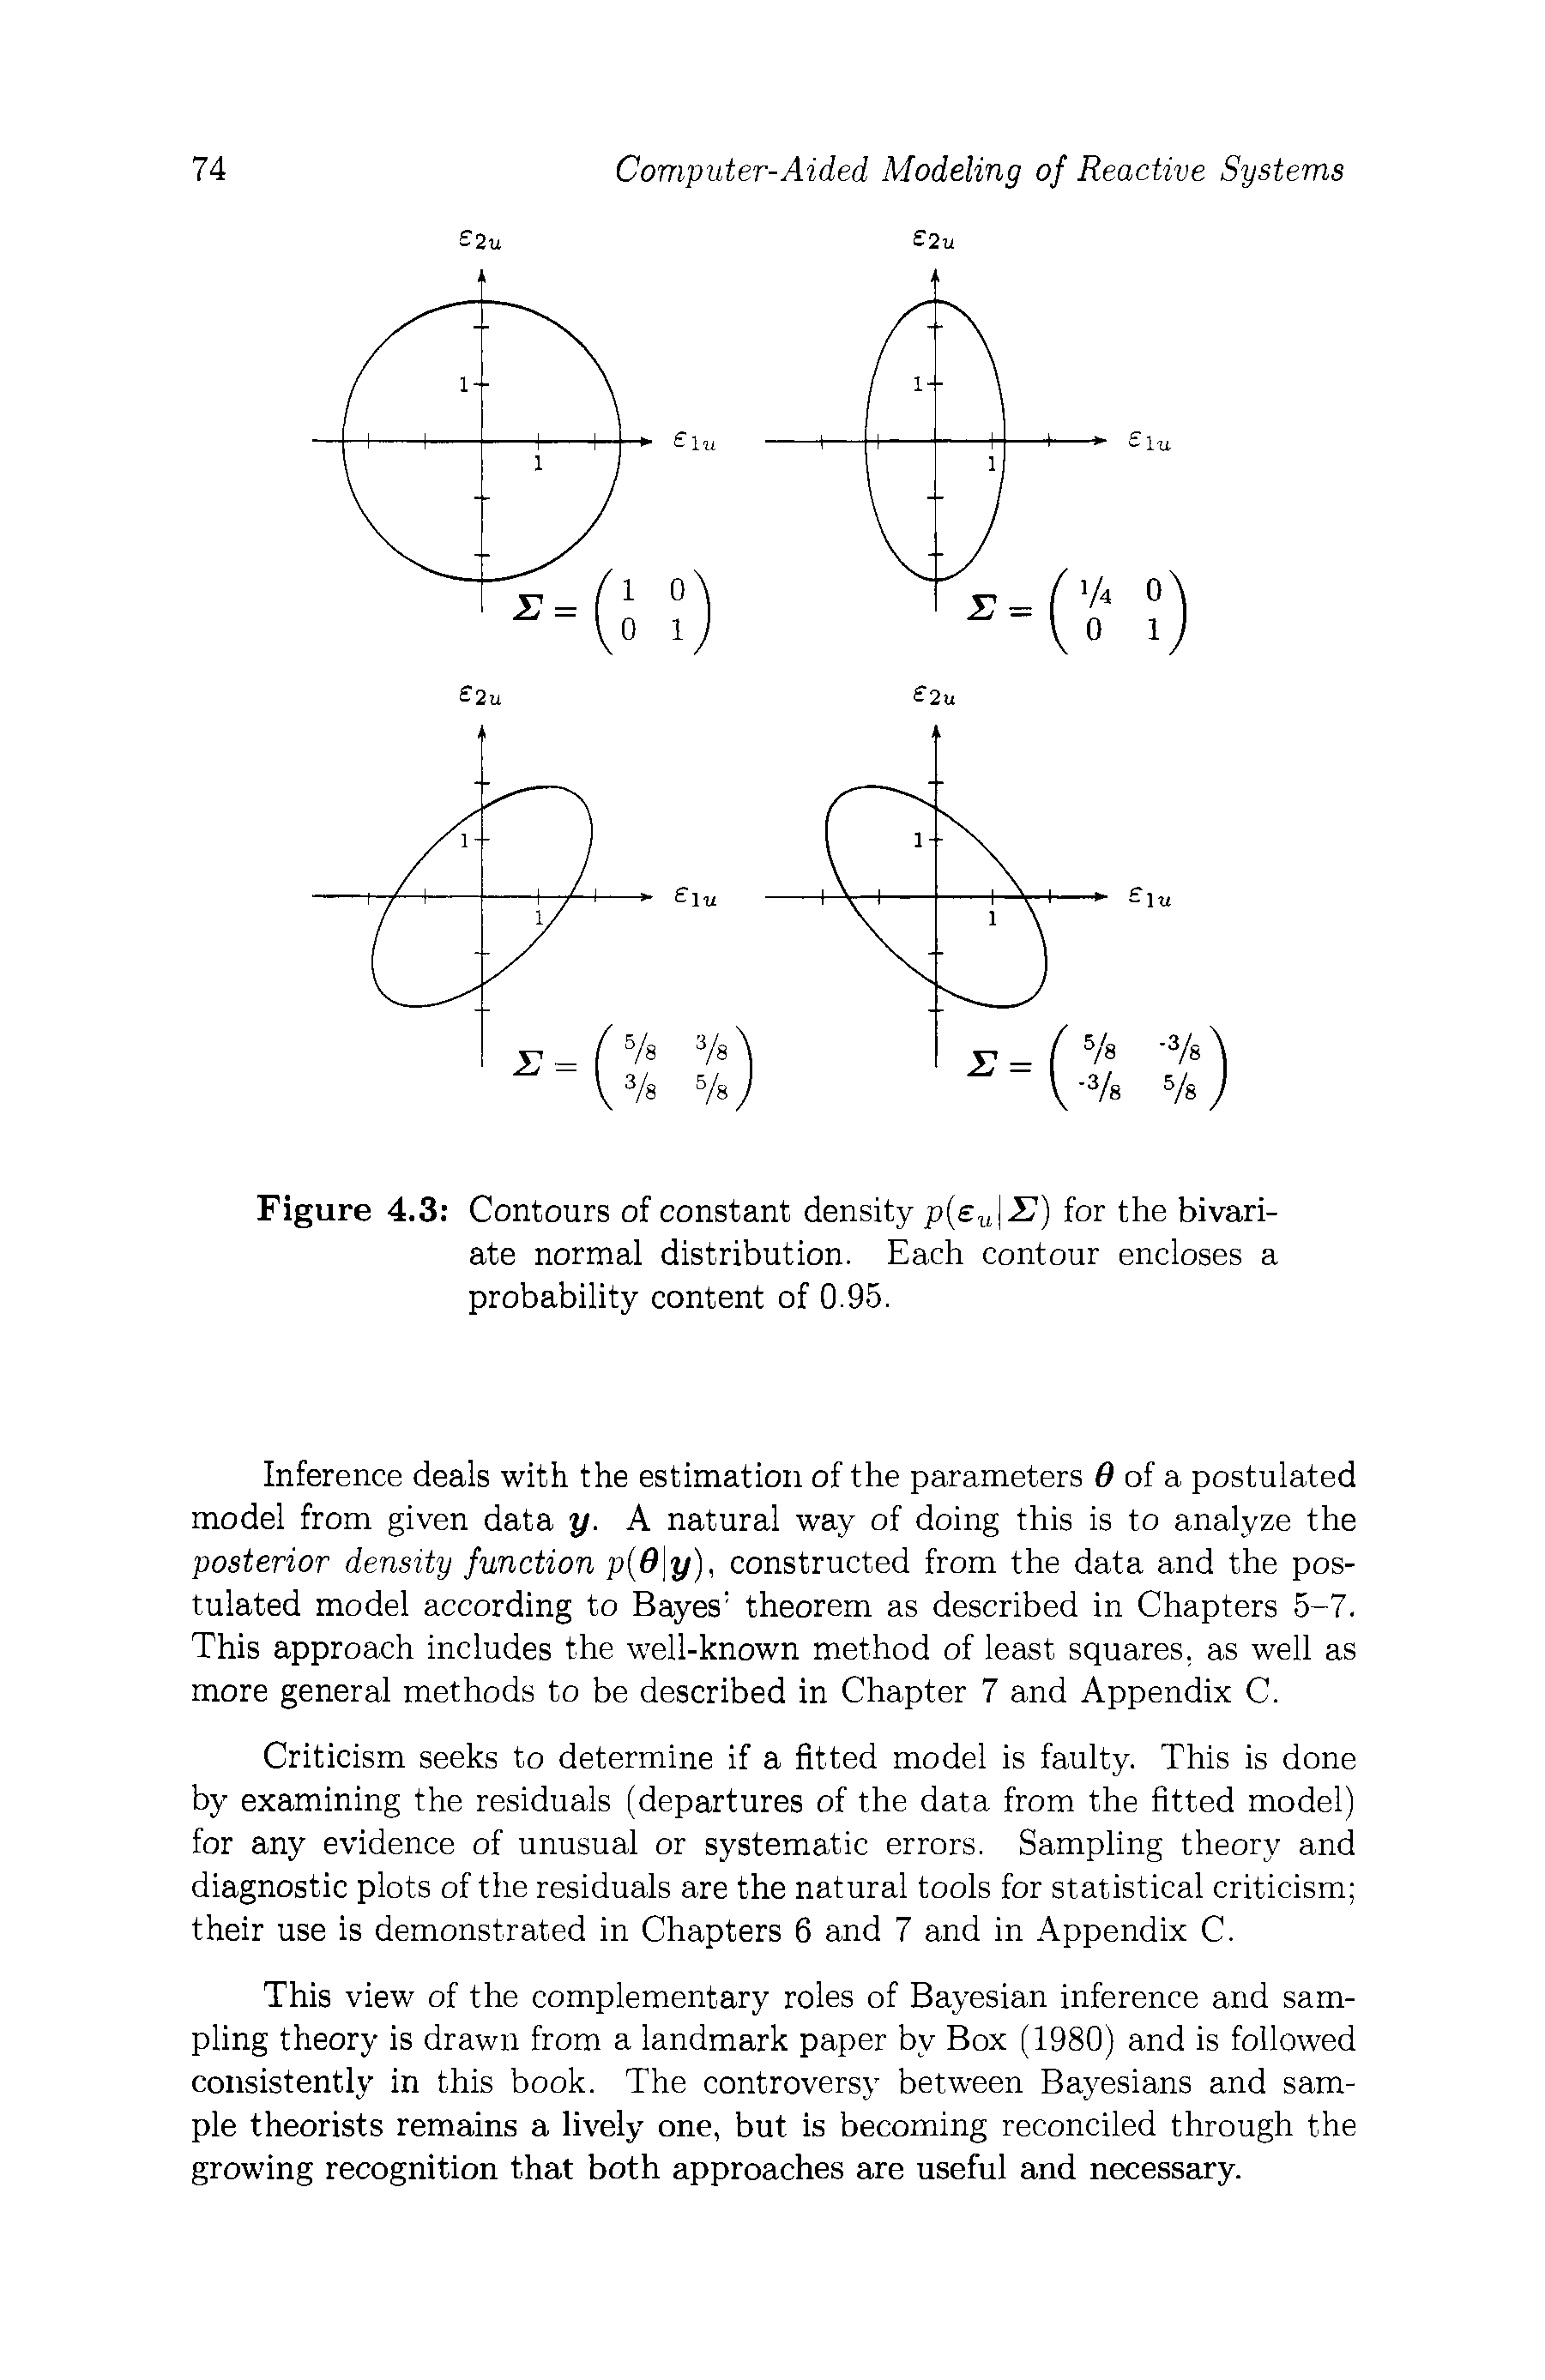 Figure 4.3 Contours of constant density 17) for the bivariate normal distribution. Each contour encloses a probability content of 0.95.